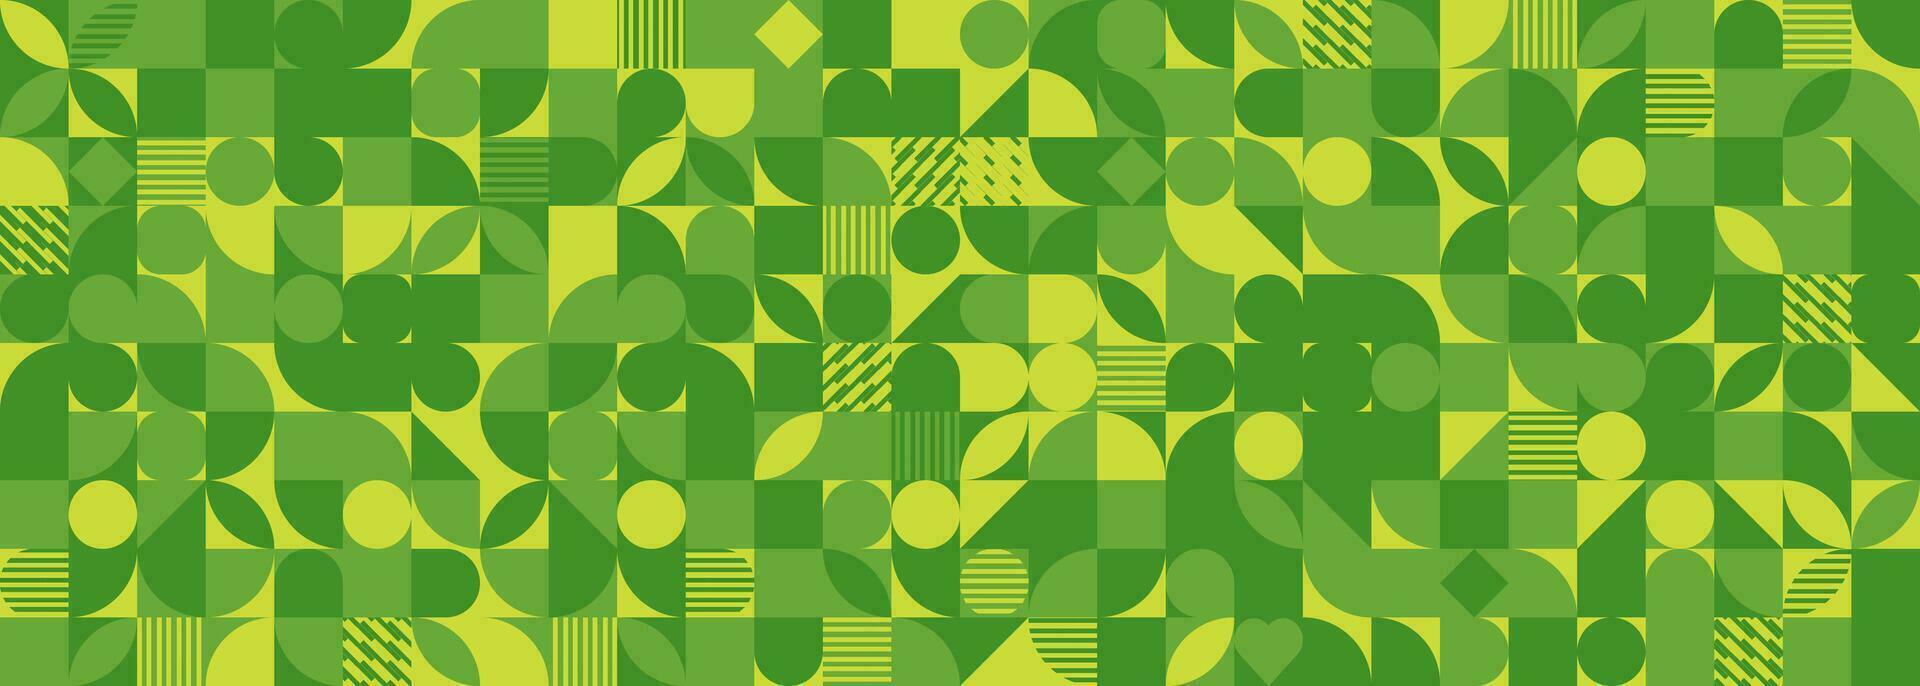 grön enfärgad bauhaus mönster i geometrisk former. geometrisk grön baner. vektor illustration. eps 10.